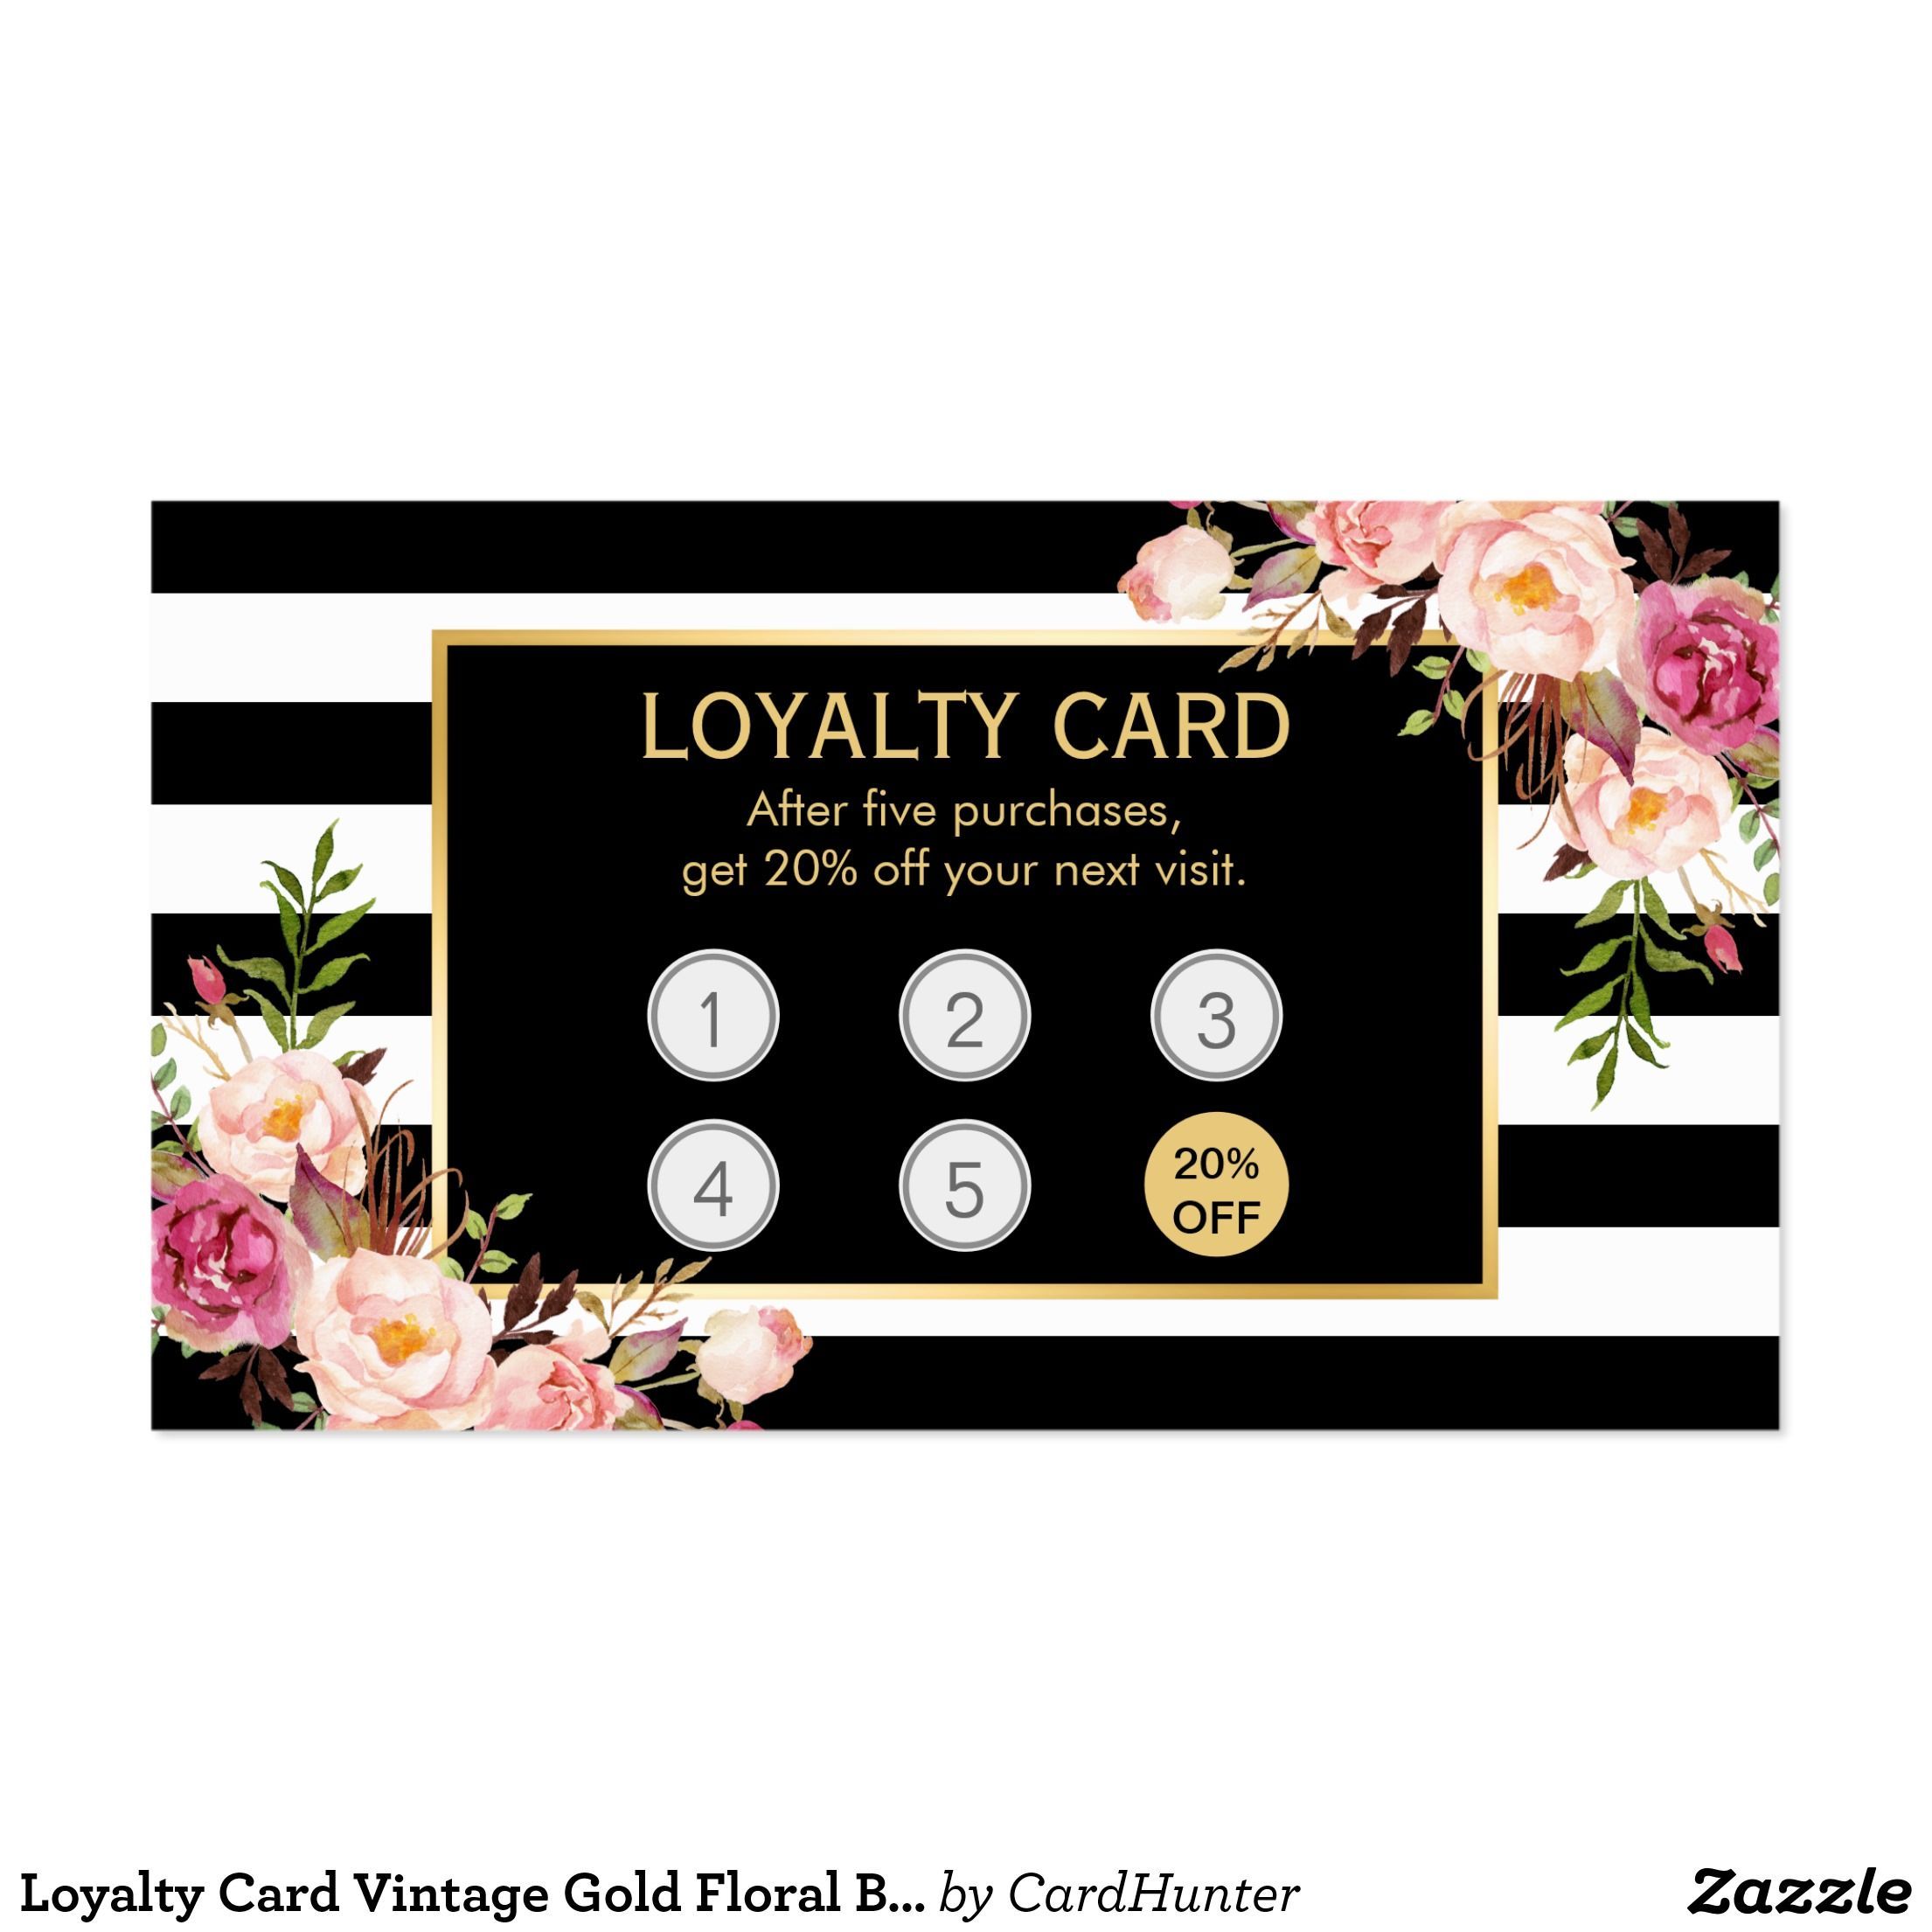 Loyalty Card Vintage Gold Floral Beauty Salon - Loyalty Card Vintage Gold Floral Beauty Salon -   19 beauty Salon publicity ideas